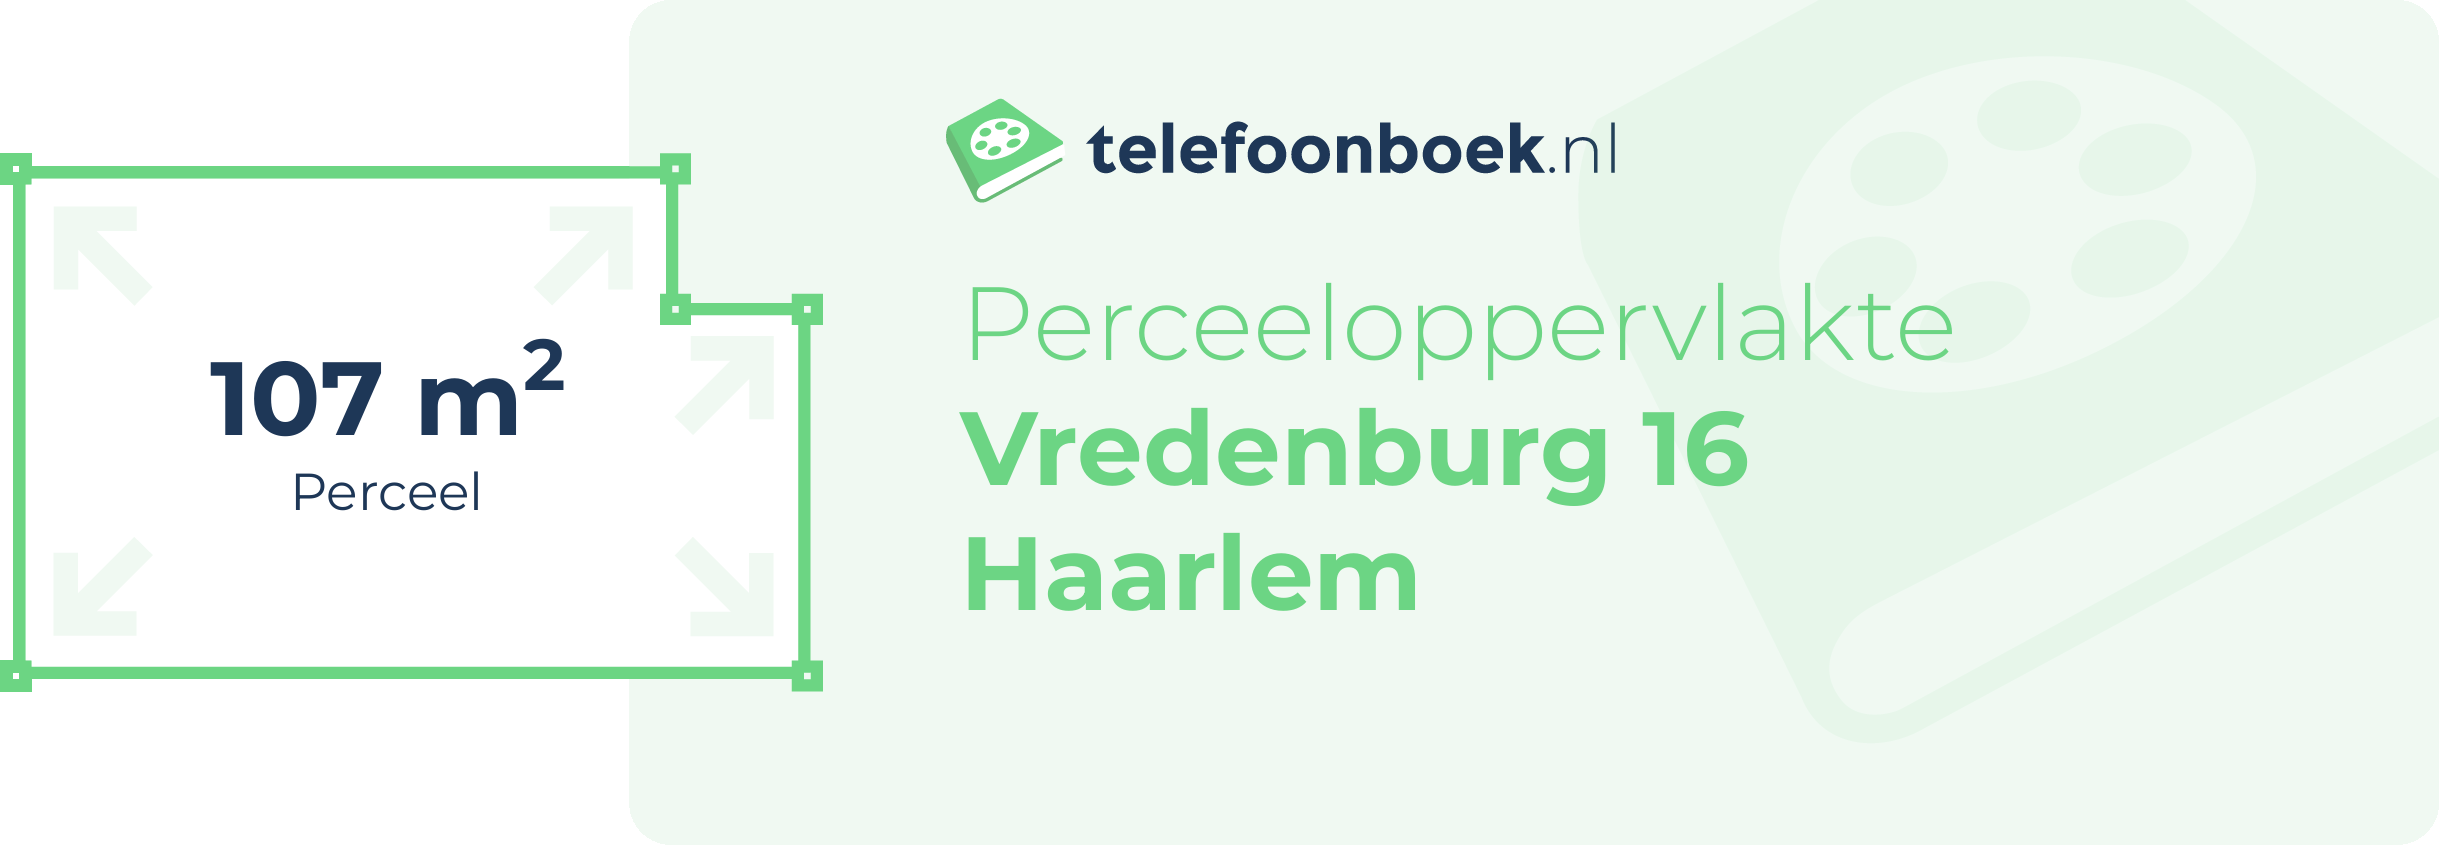 Perceeloppervlakte Vredenburg 16 Haarlem